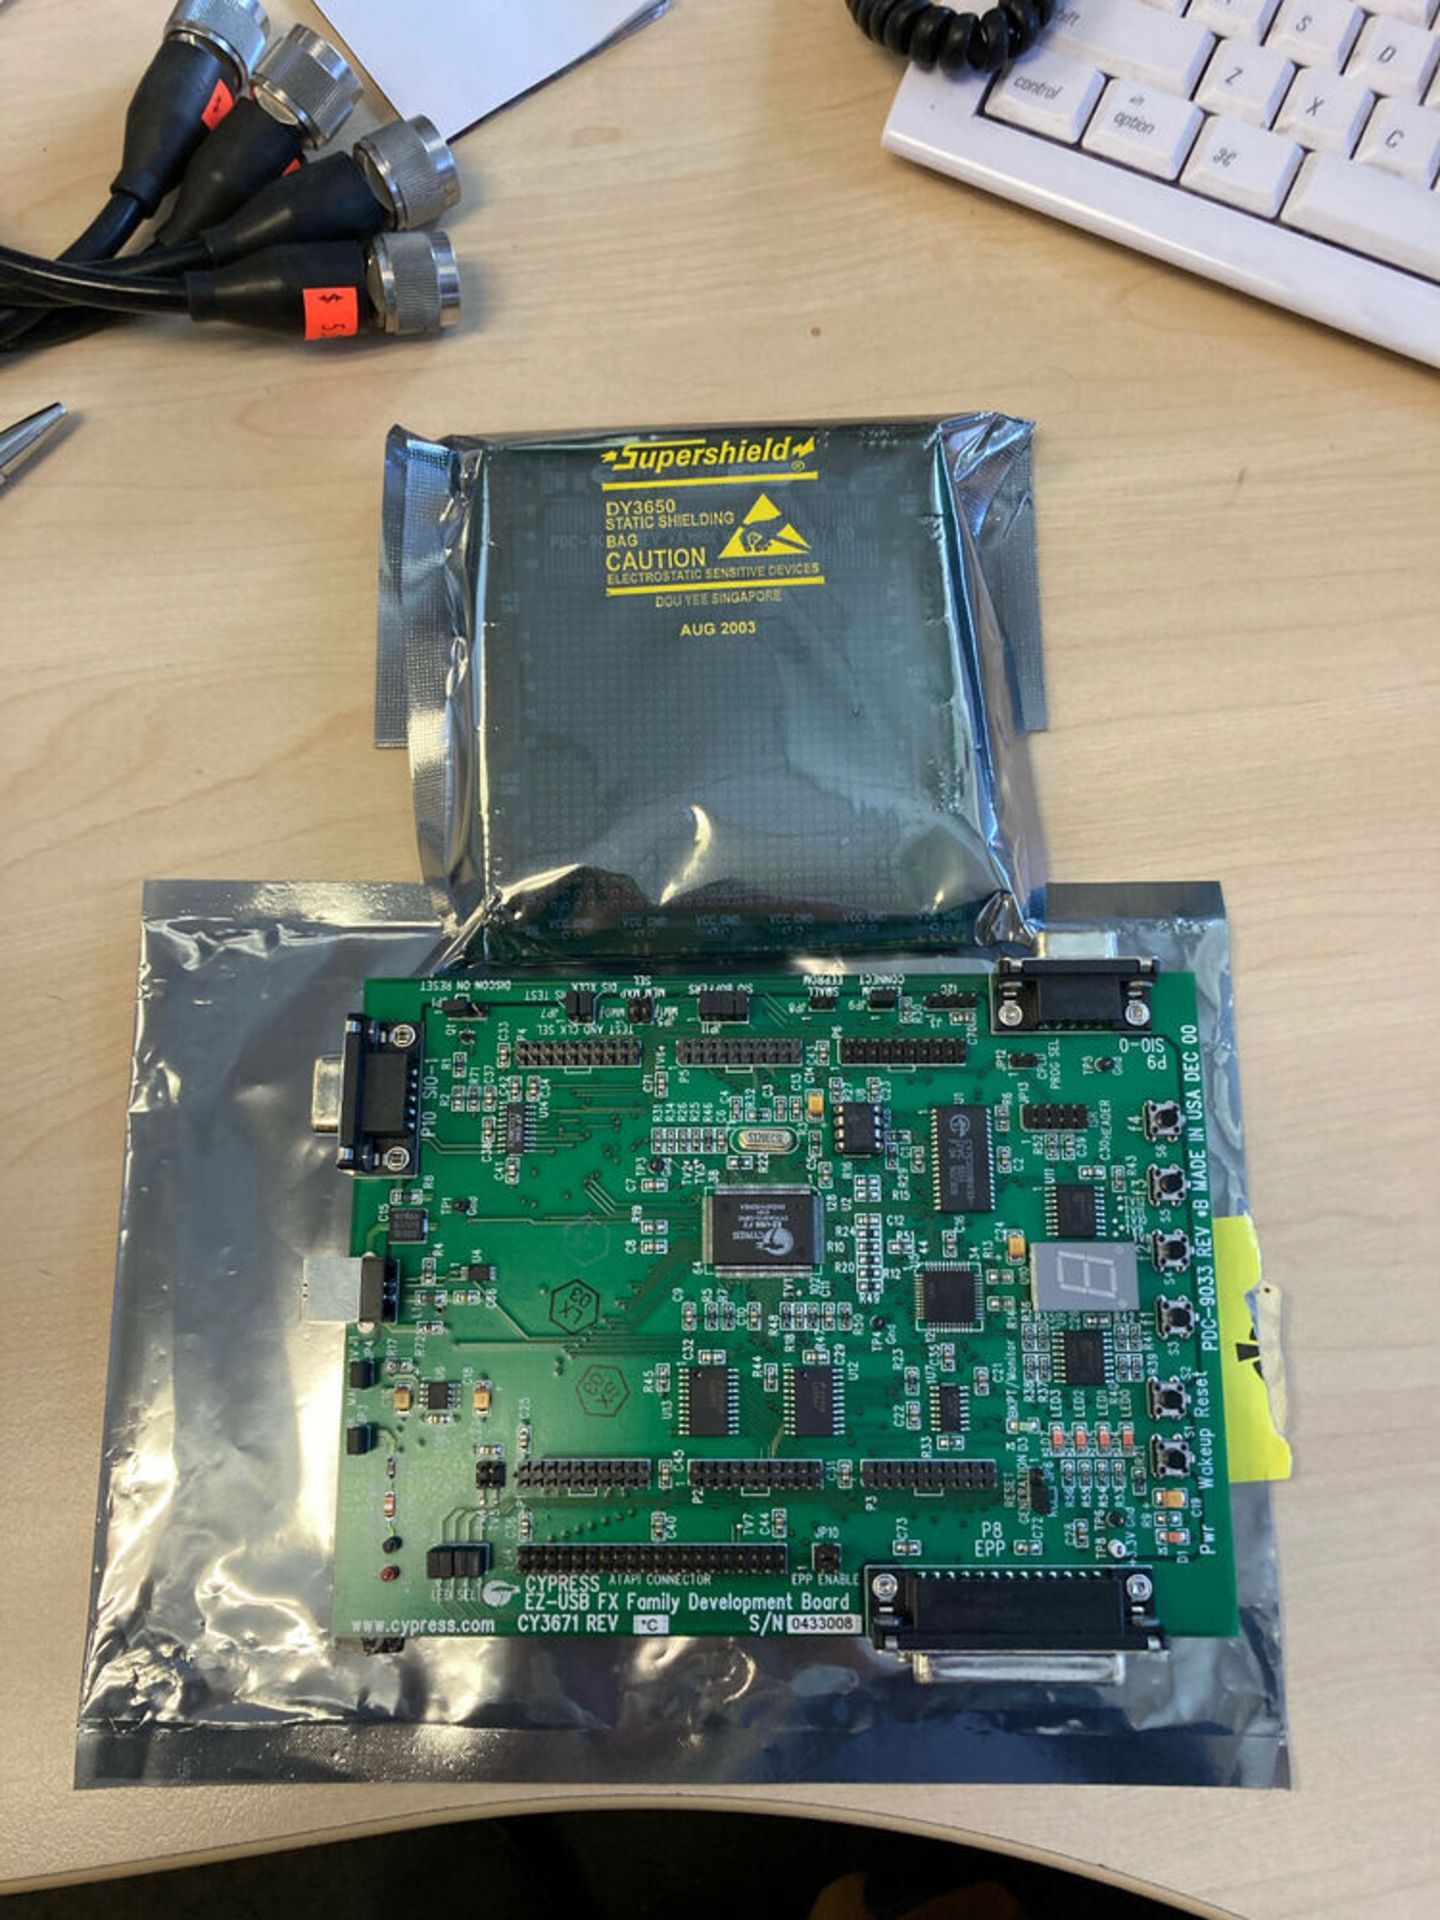 Cypress Semiconductor CY3681 EZ-USB FX2 Evaluation Board Development Kit